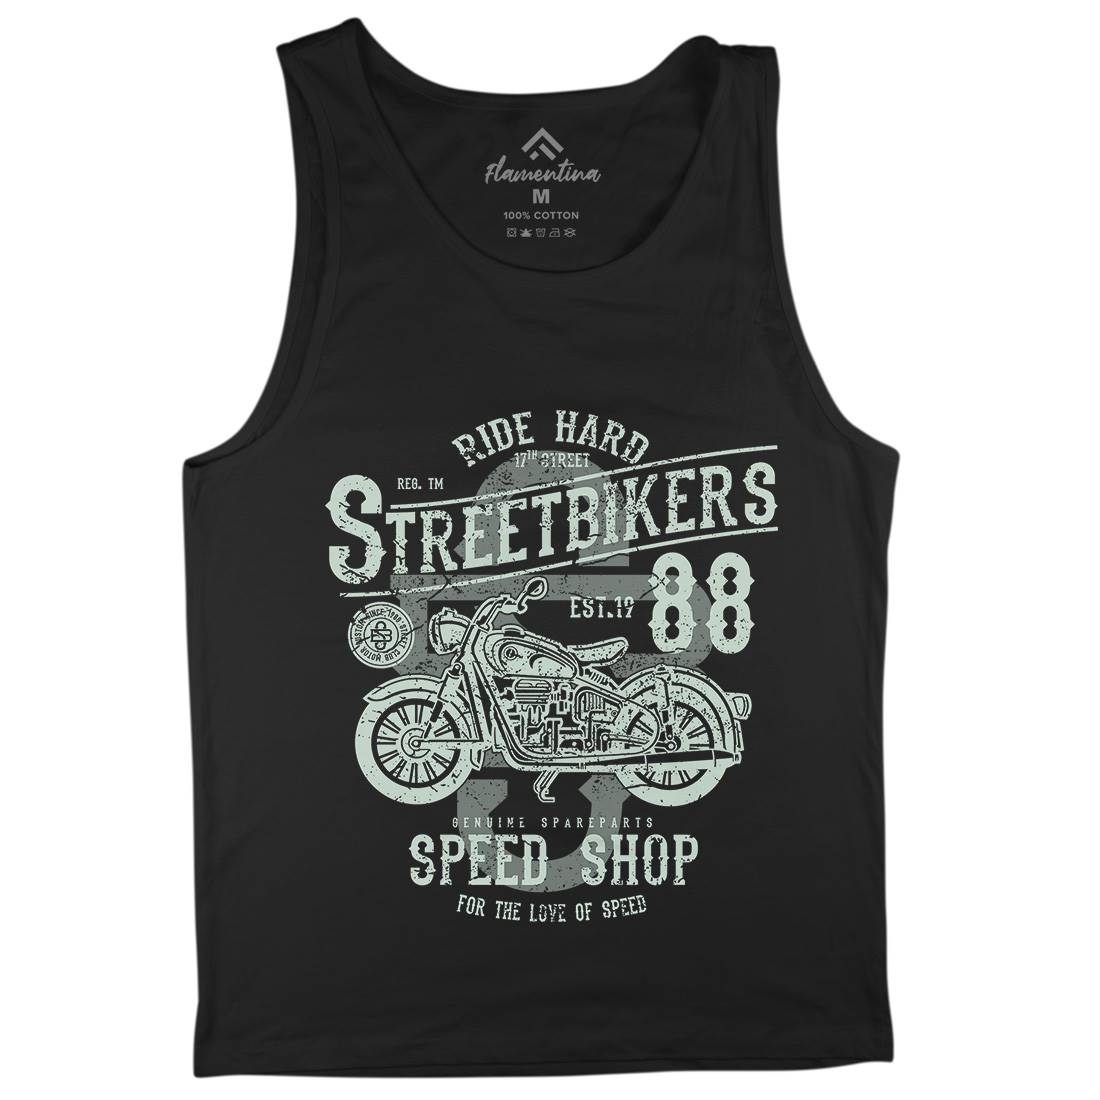 Street Bikers Mens Tank Top Vest Motorcycles A160